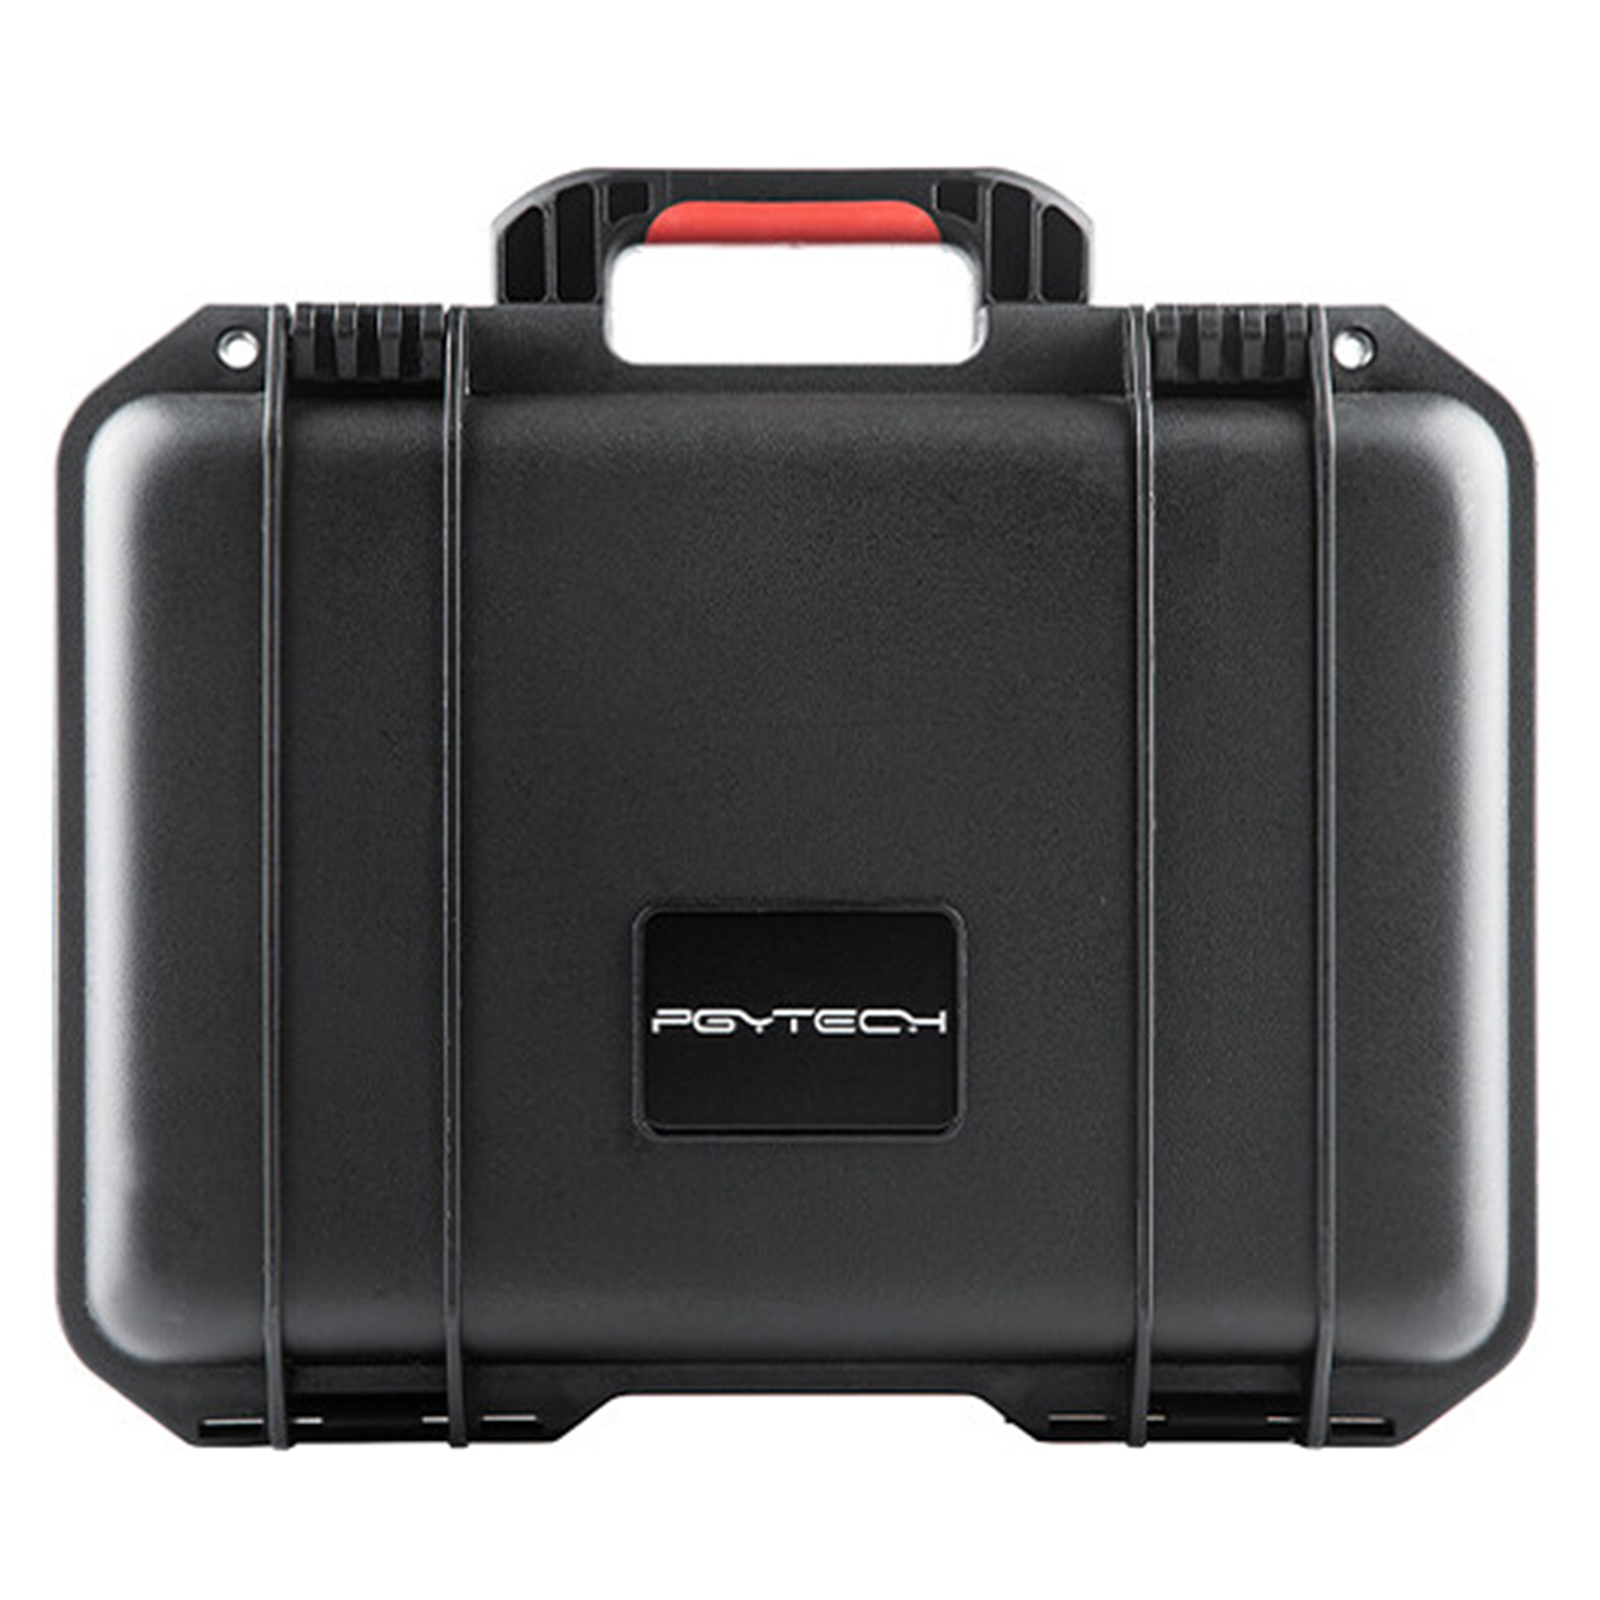 Image of Pgytech DJI Mini 3 Pro Safety Carrying Case